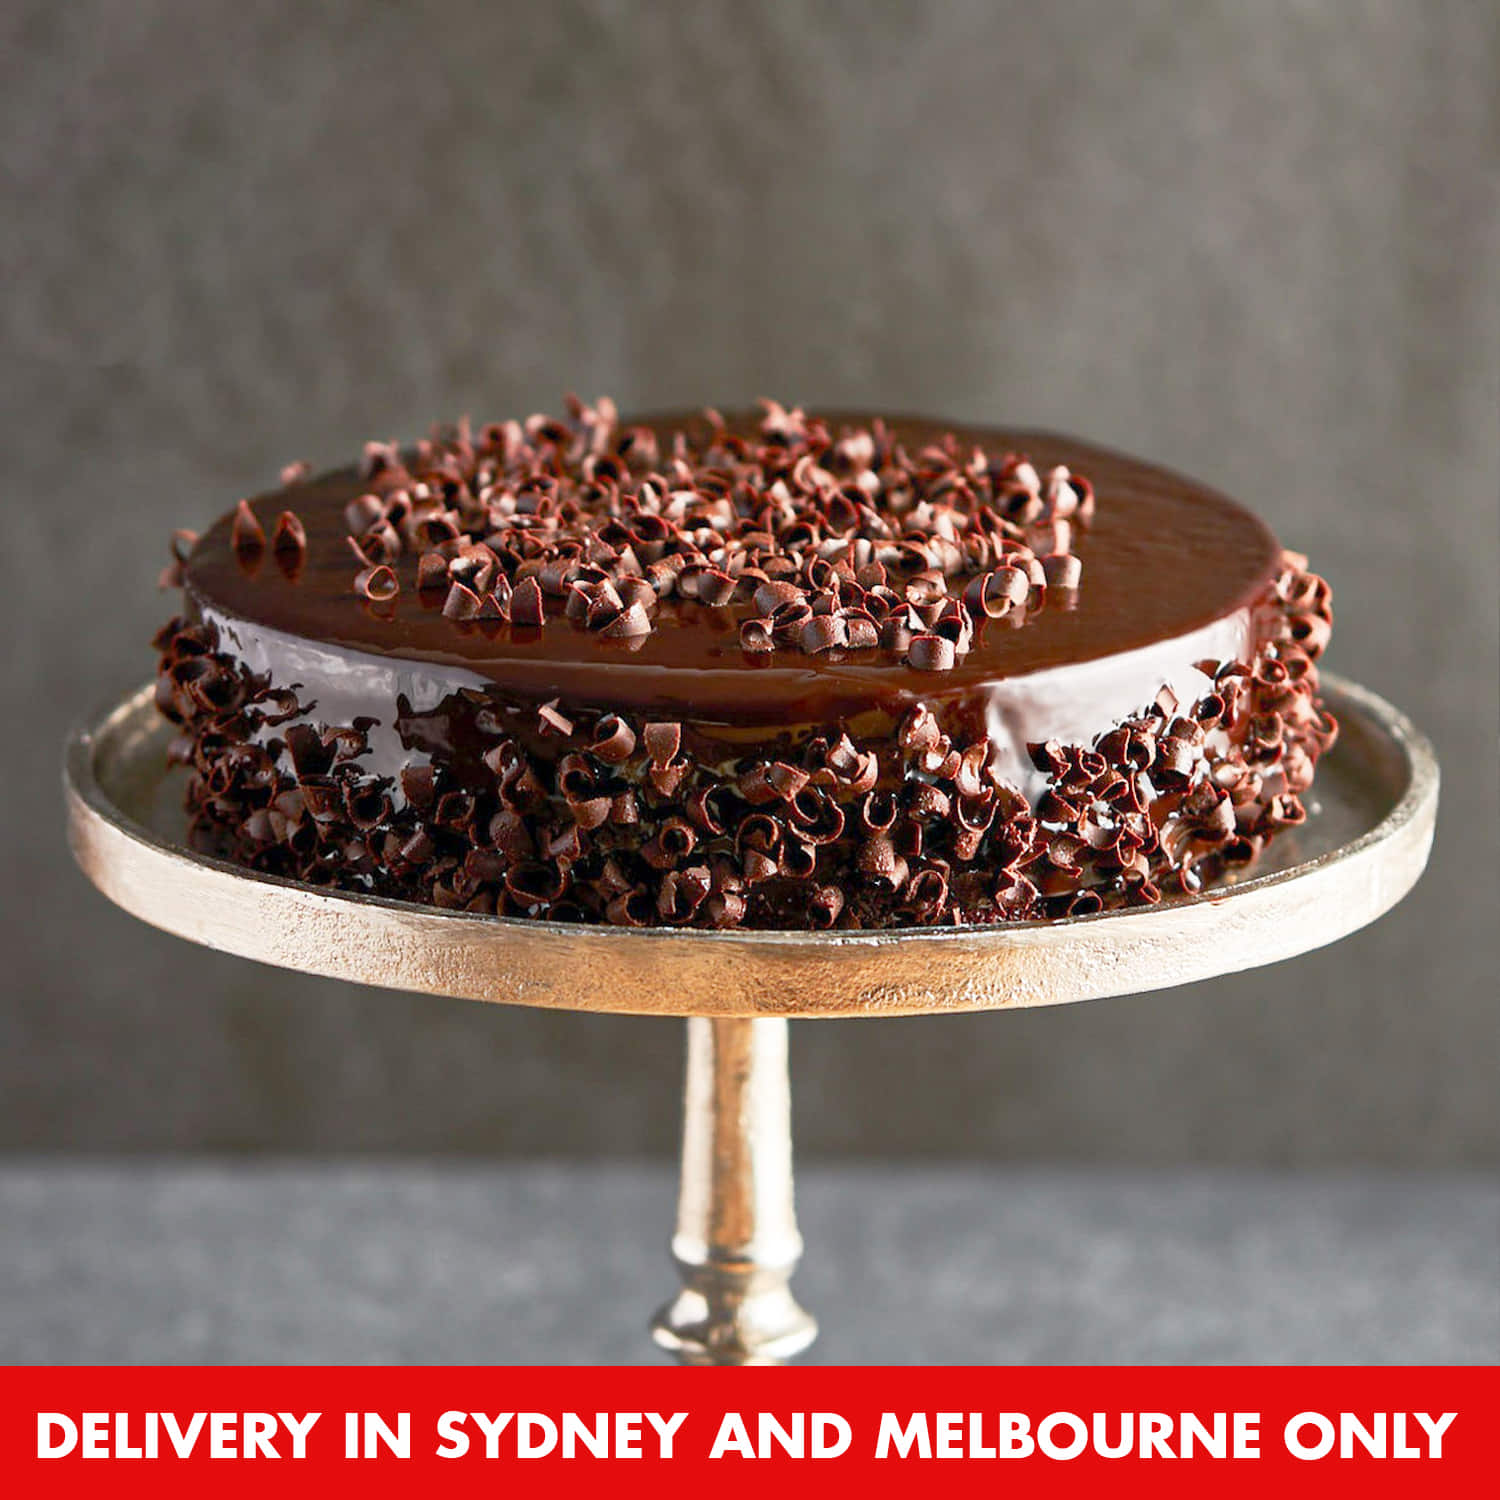 Australian/Canadian themed cake | Themed cakes, Australia cake, Cake